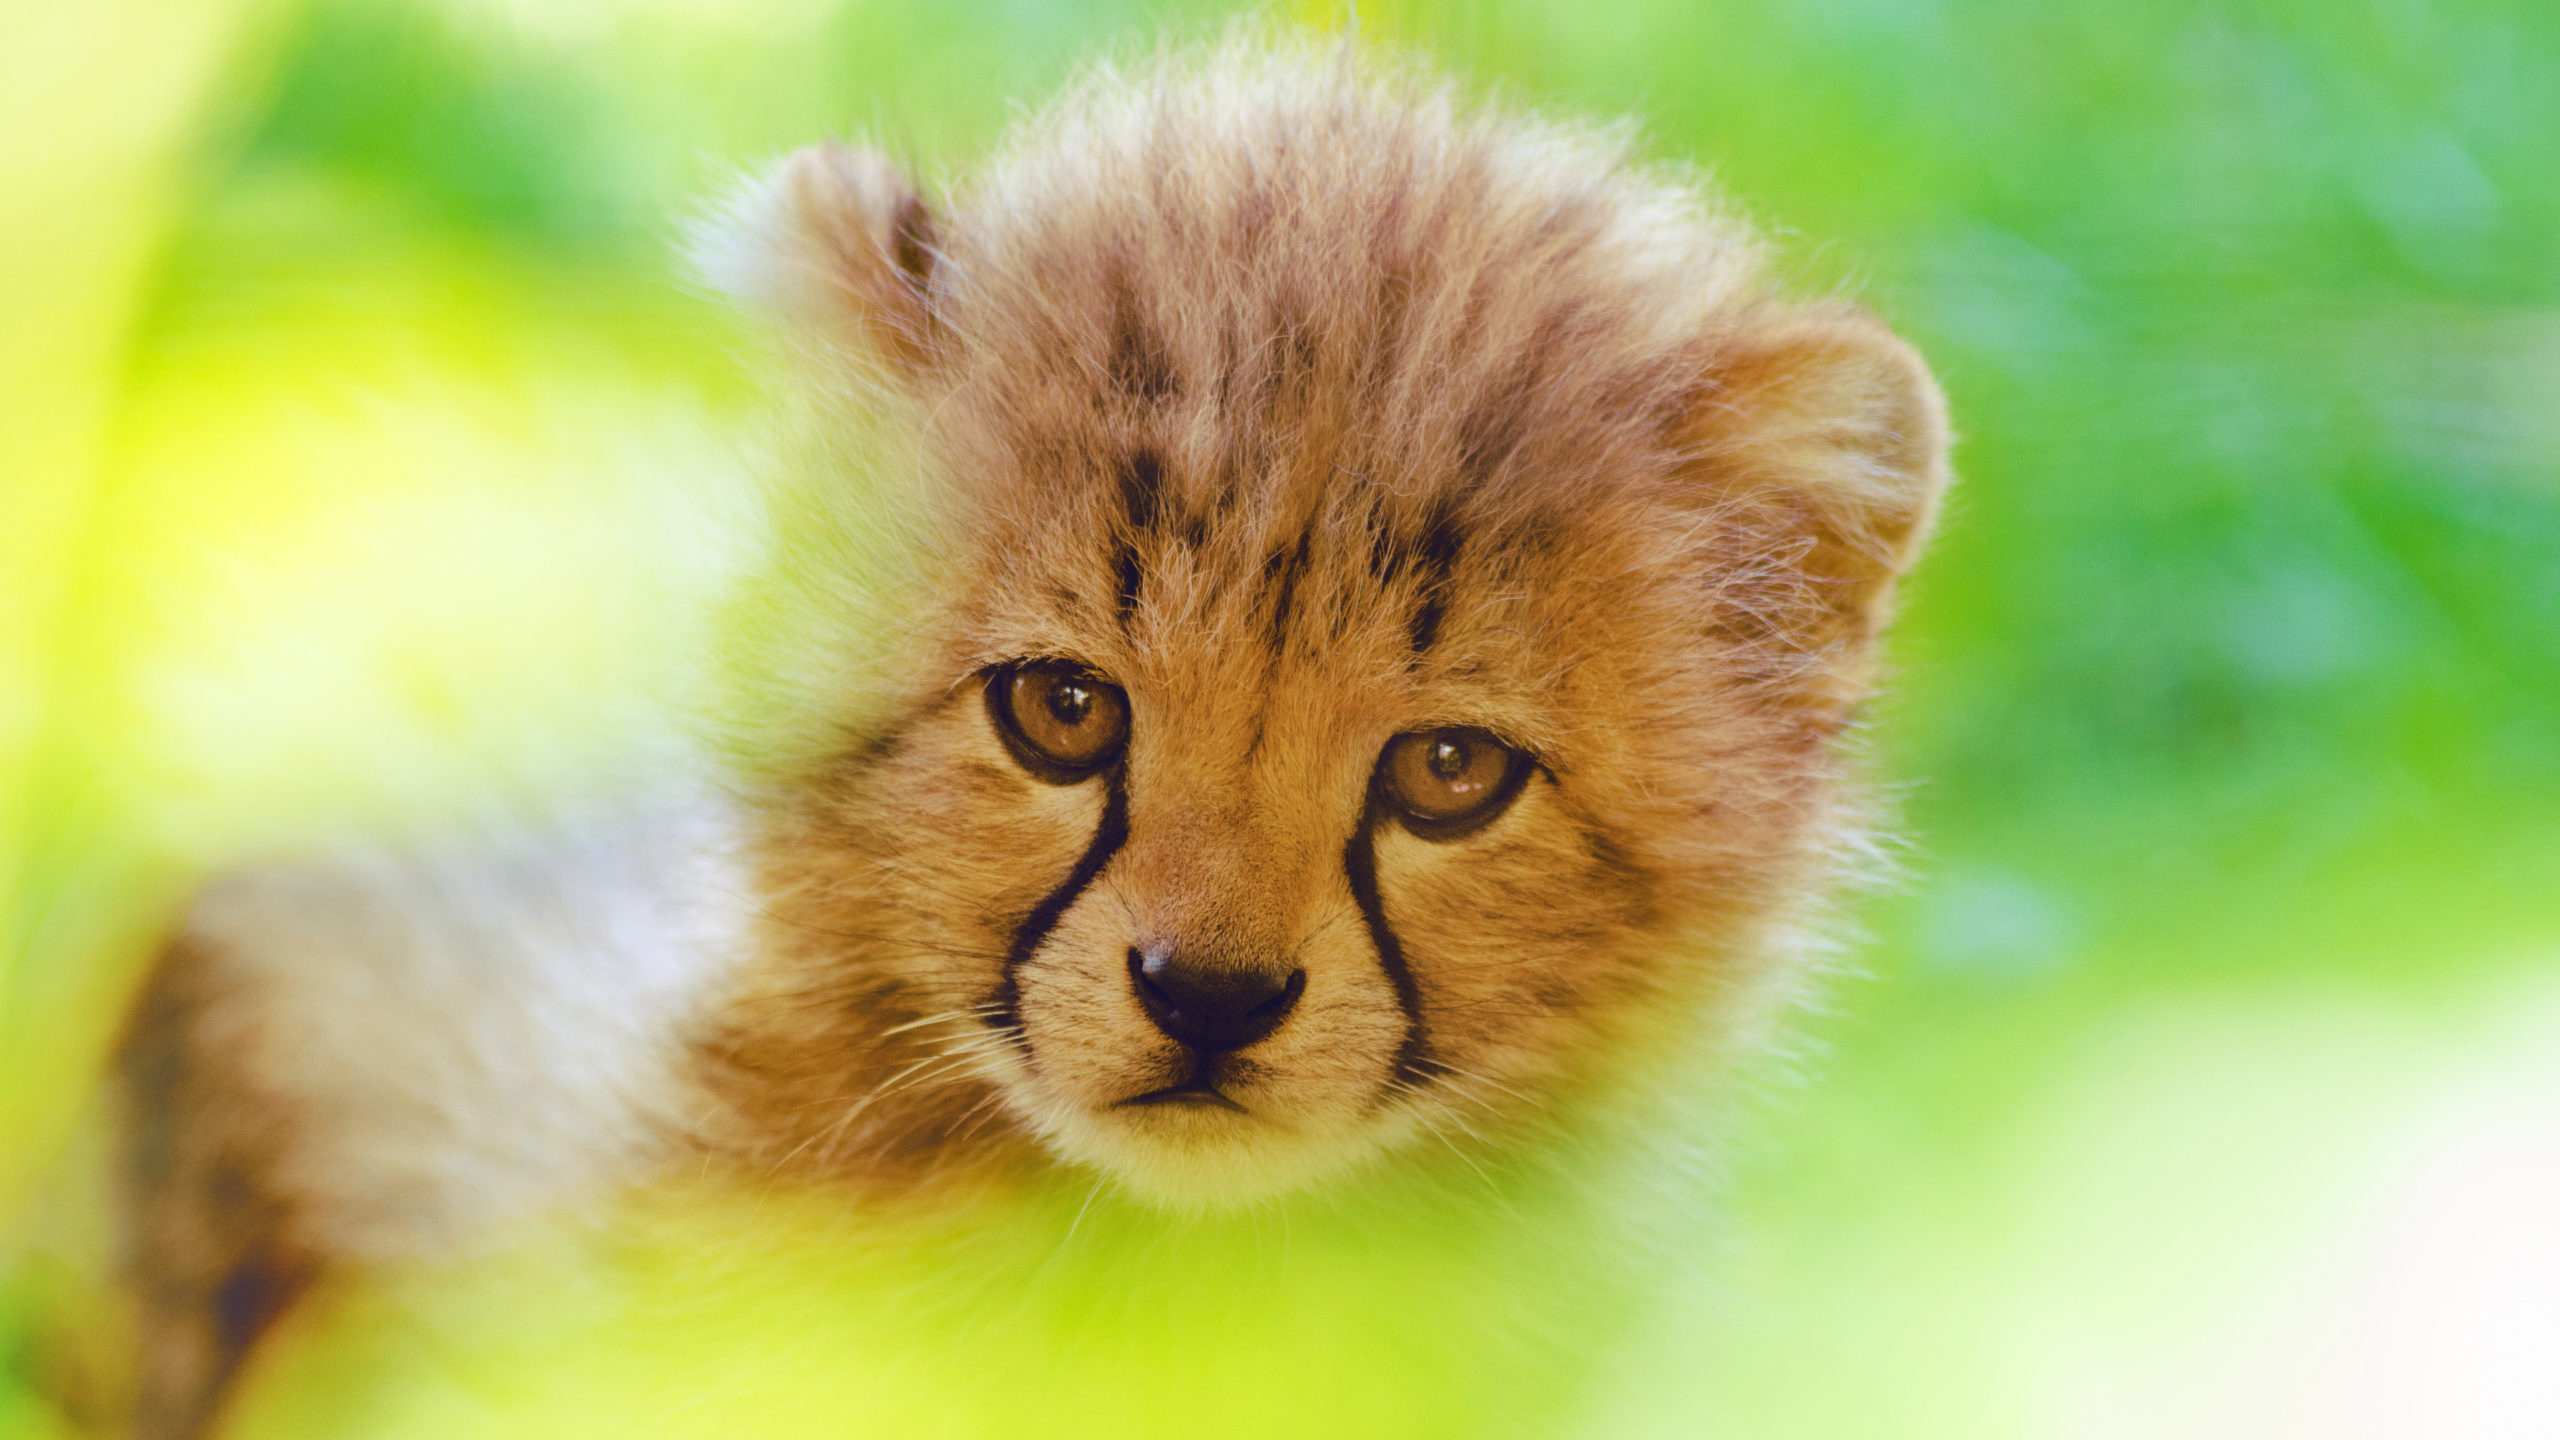 Cheetah cubs, Adorable faces, Playful innocence, Captivating stripes, 2560x1440 HD Desktop